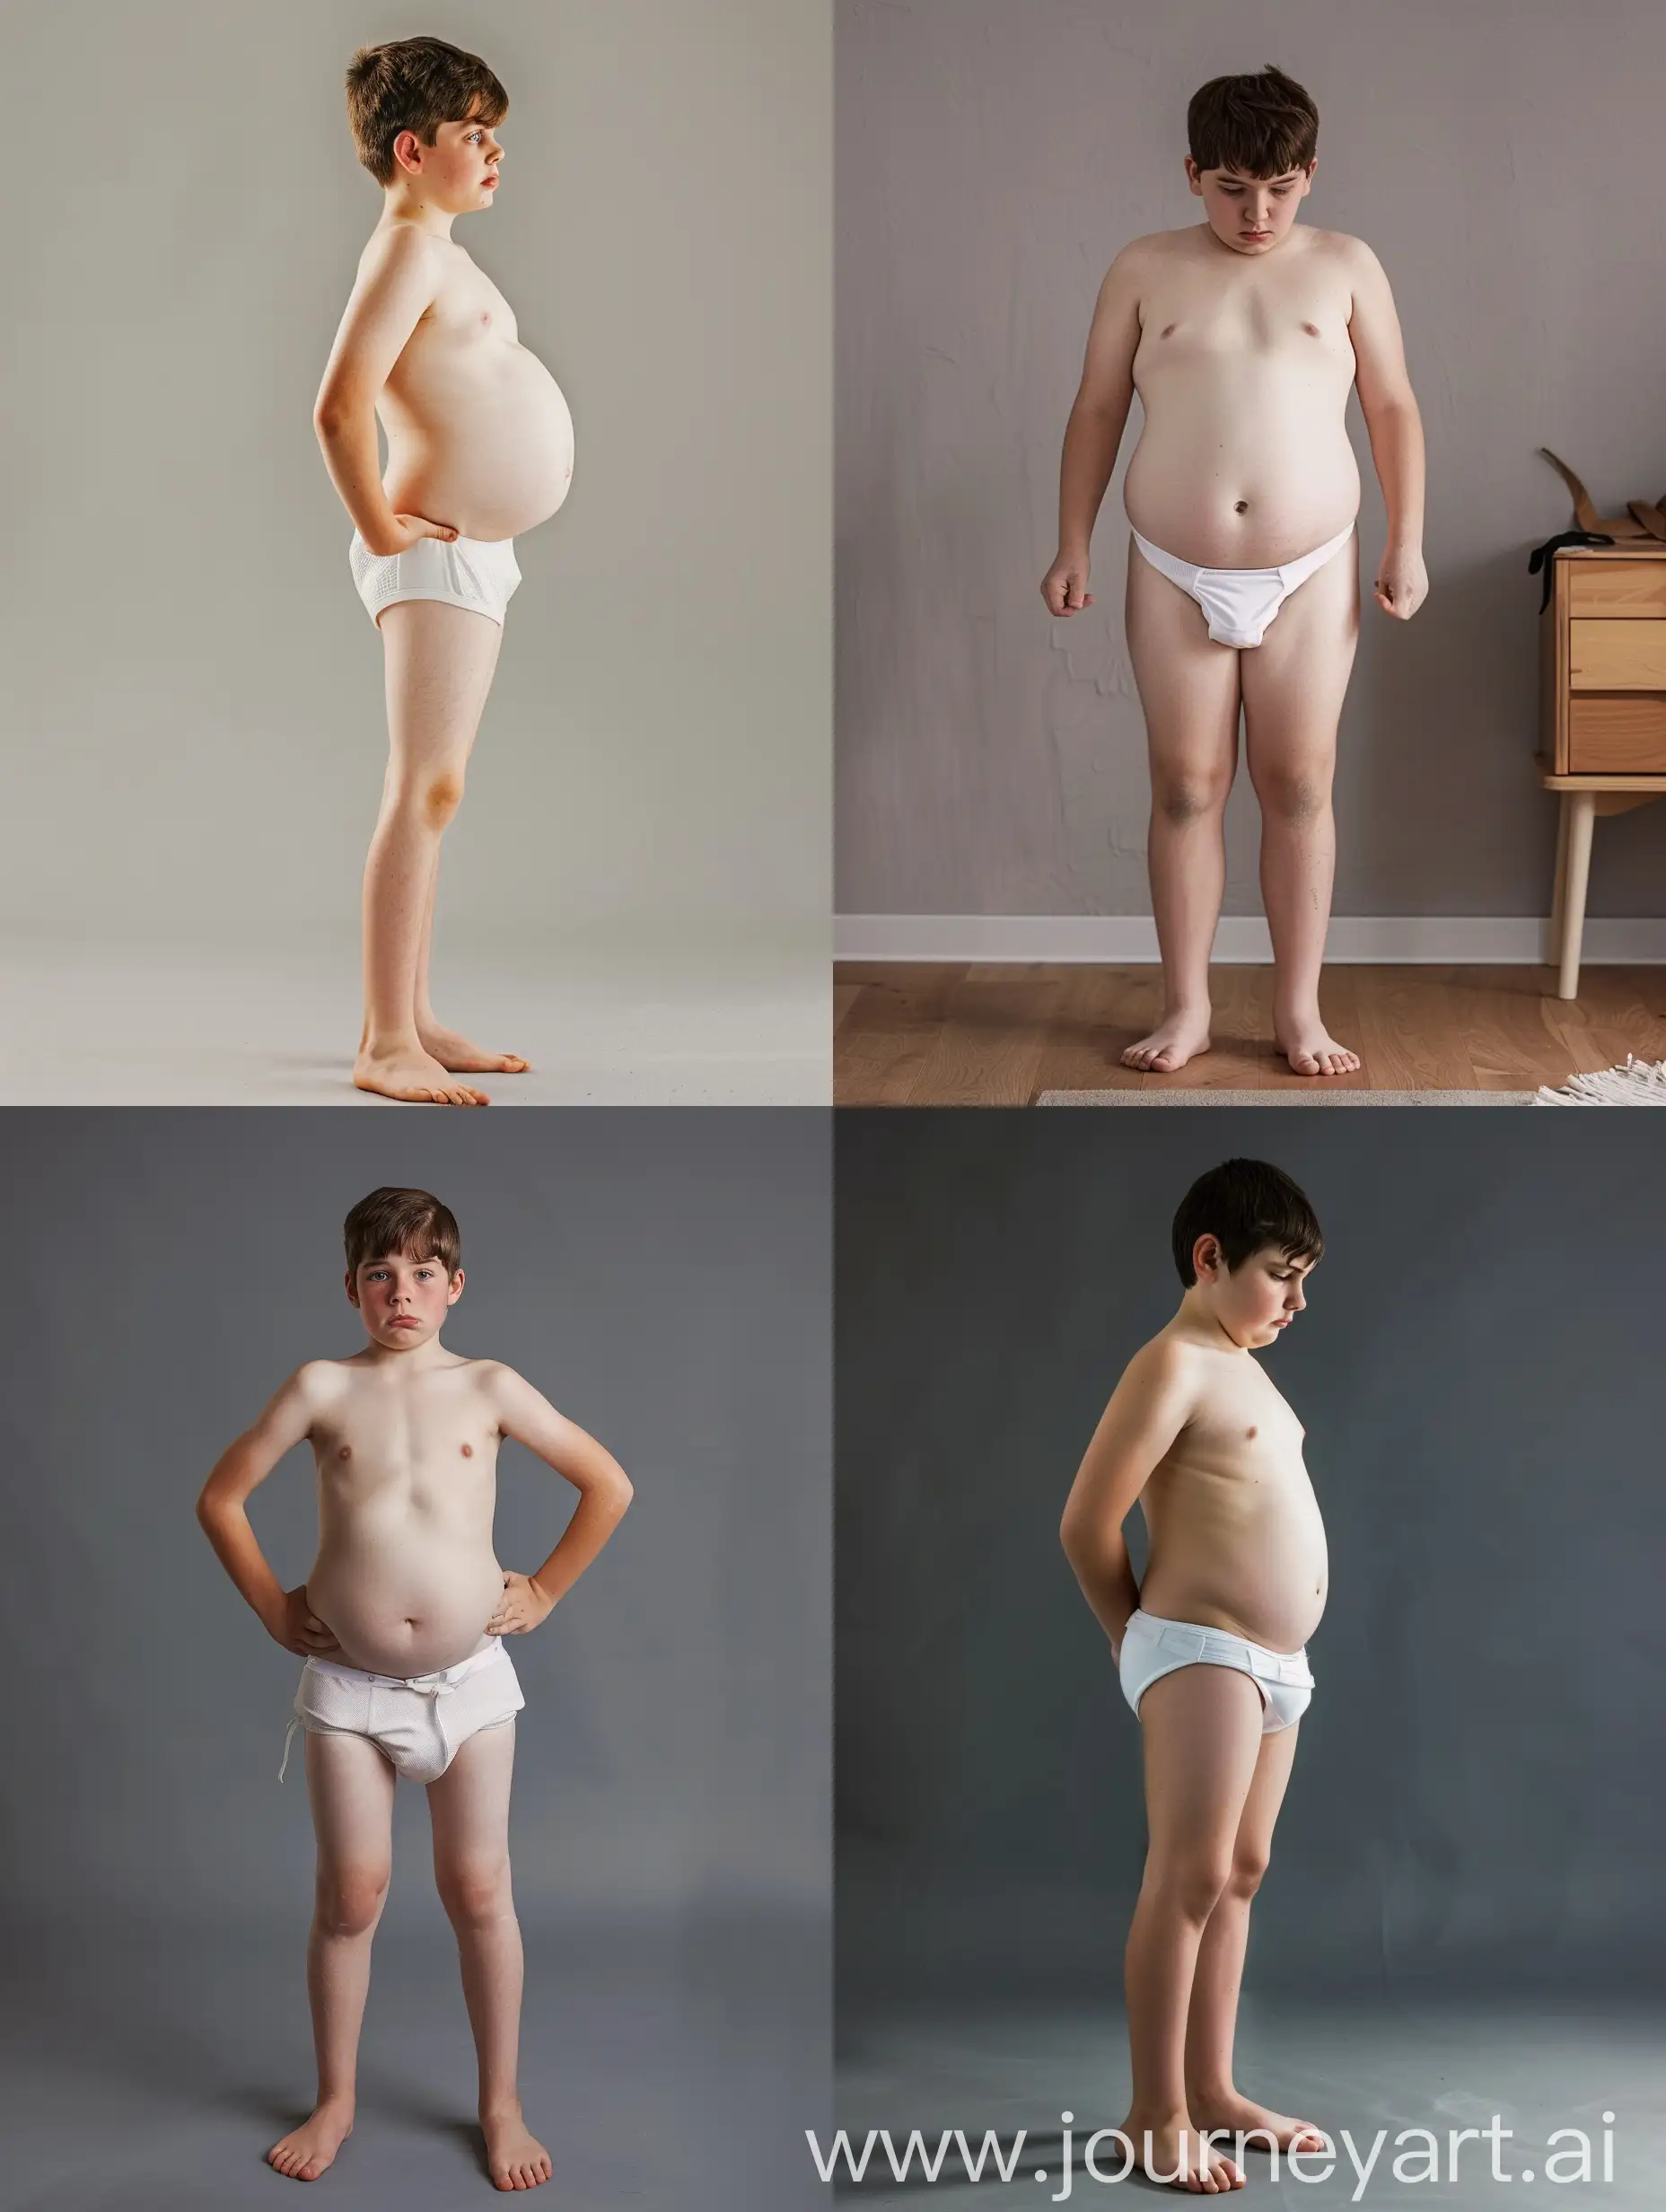 Teenager-Gaining-Weight-in-White-Briefs